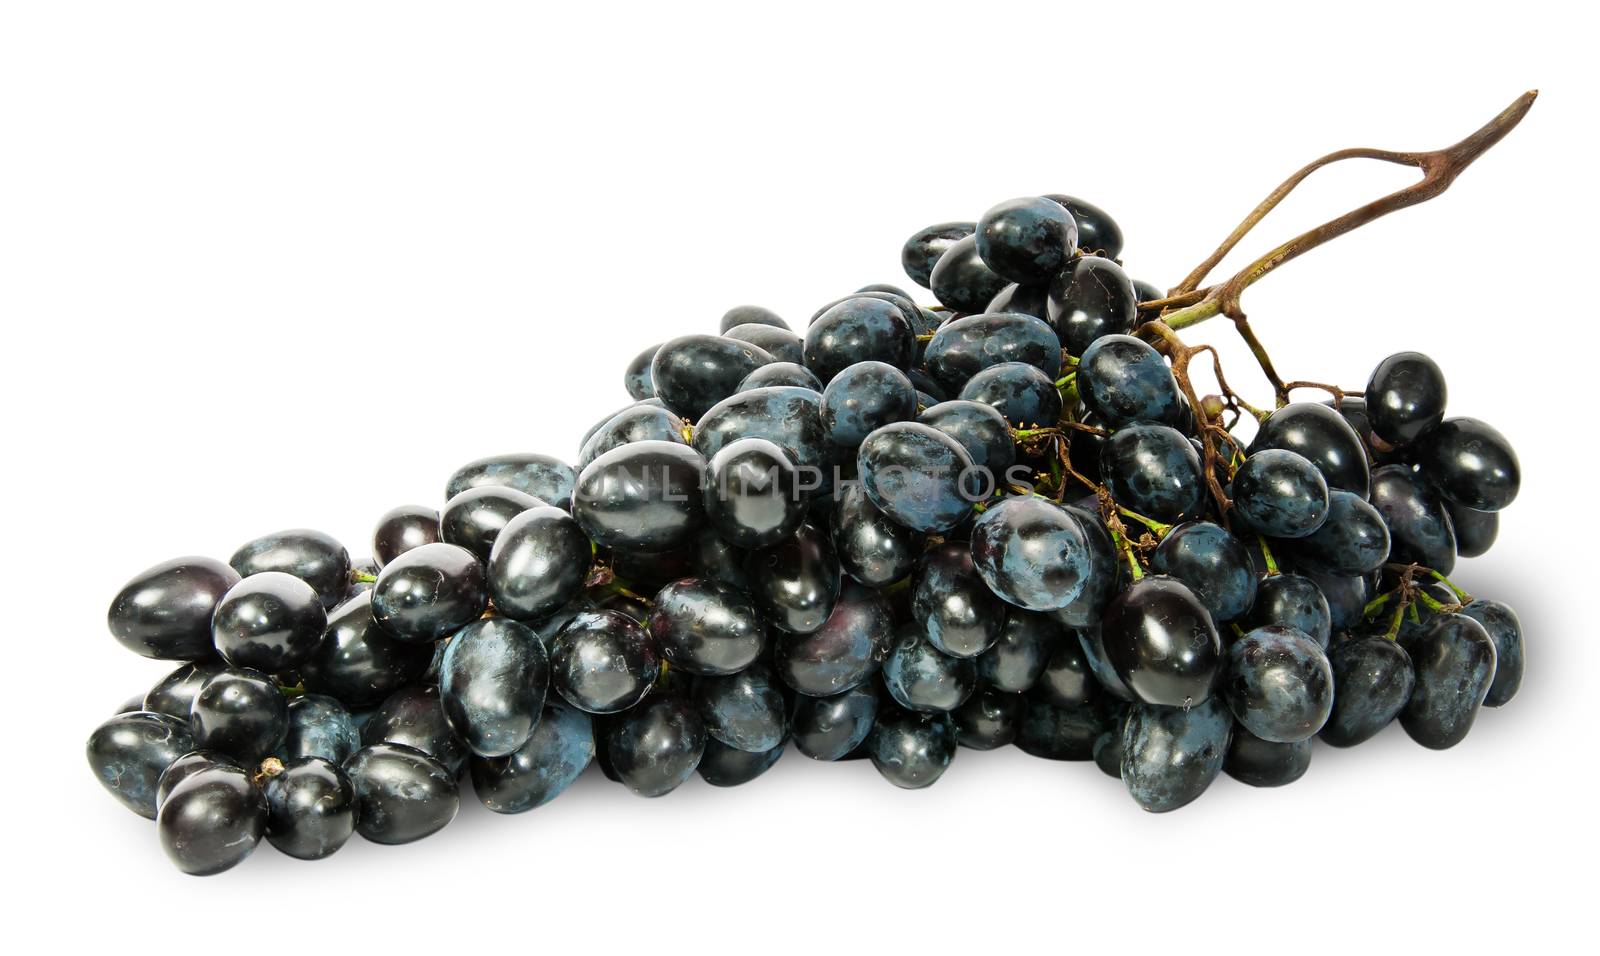 Big bunch of ripe dark grapes by Cipariss